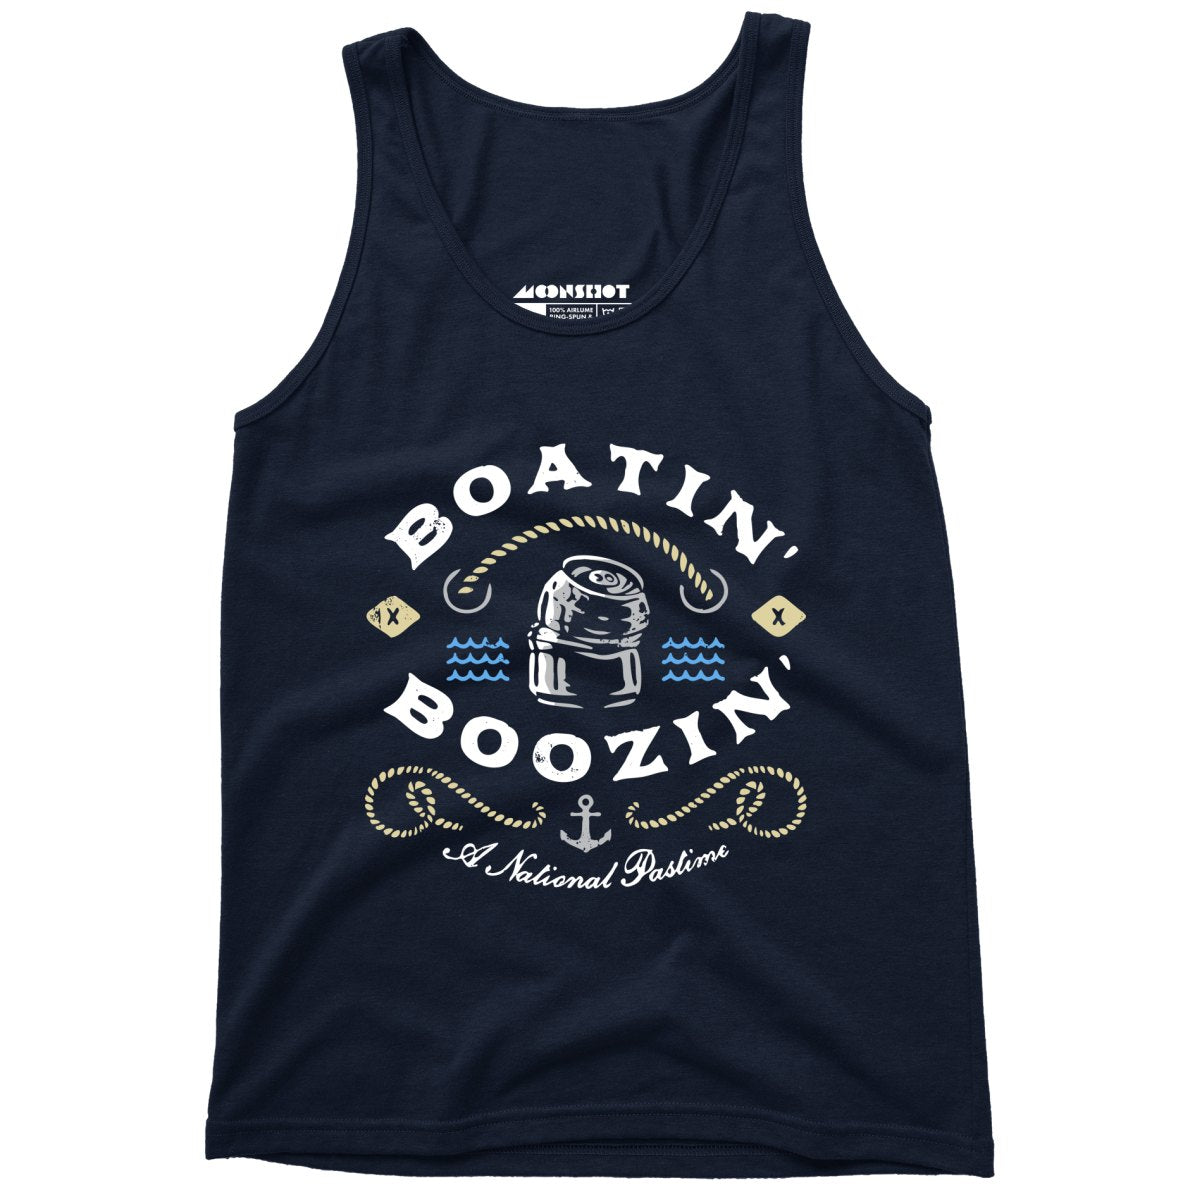 Boatin' & Boozin' - Unisex Tank Top